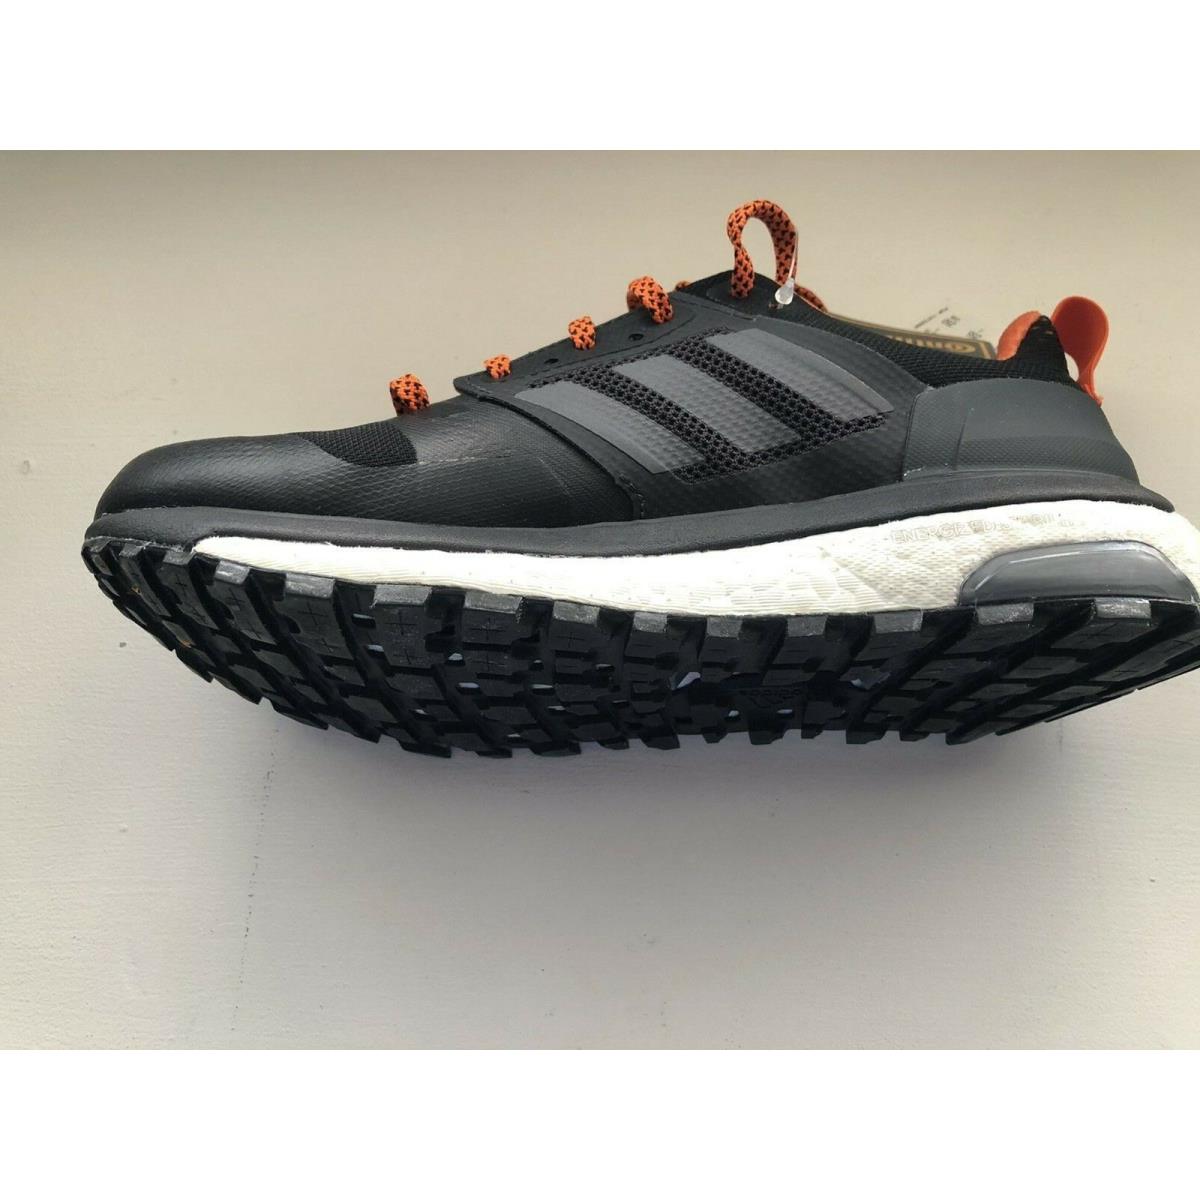 Síguenos Permanentemente compromiso Adidas Supernova Boost Trail Athletic Shoe Black Orange Men`s 7.5 |  692740683164 - Adidas shoes Boost - Black/ orange | SporTipTop